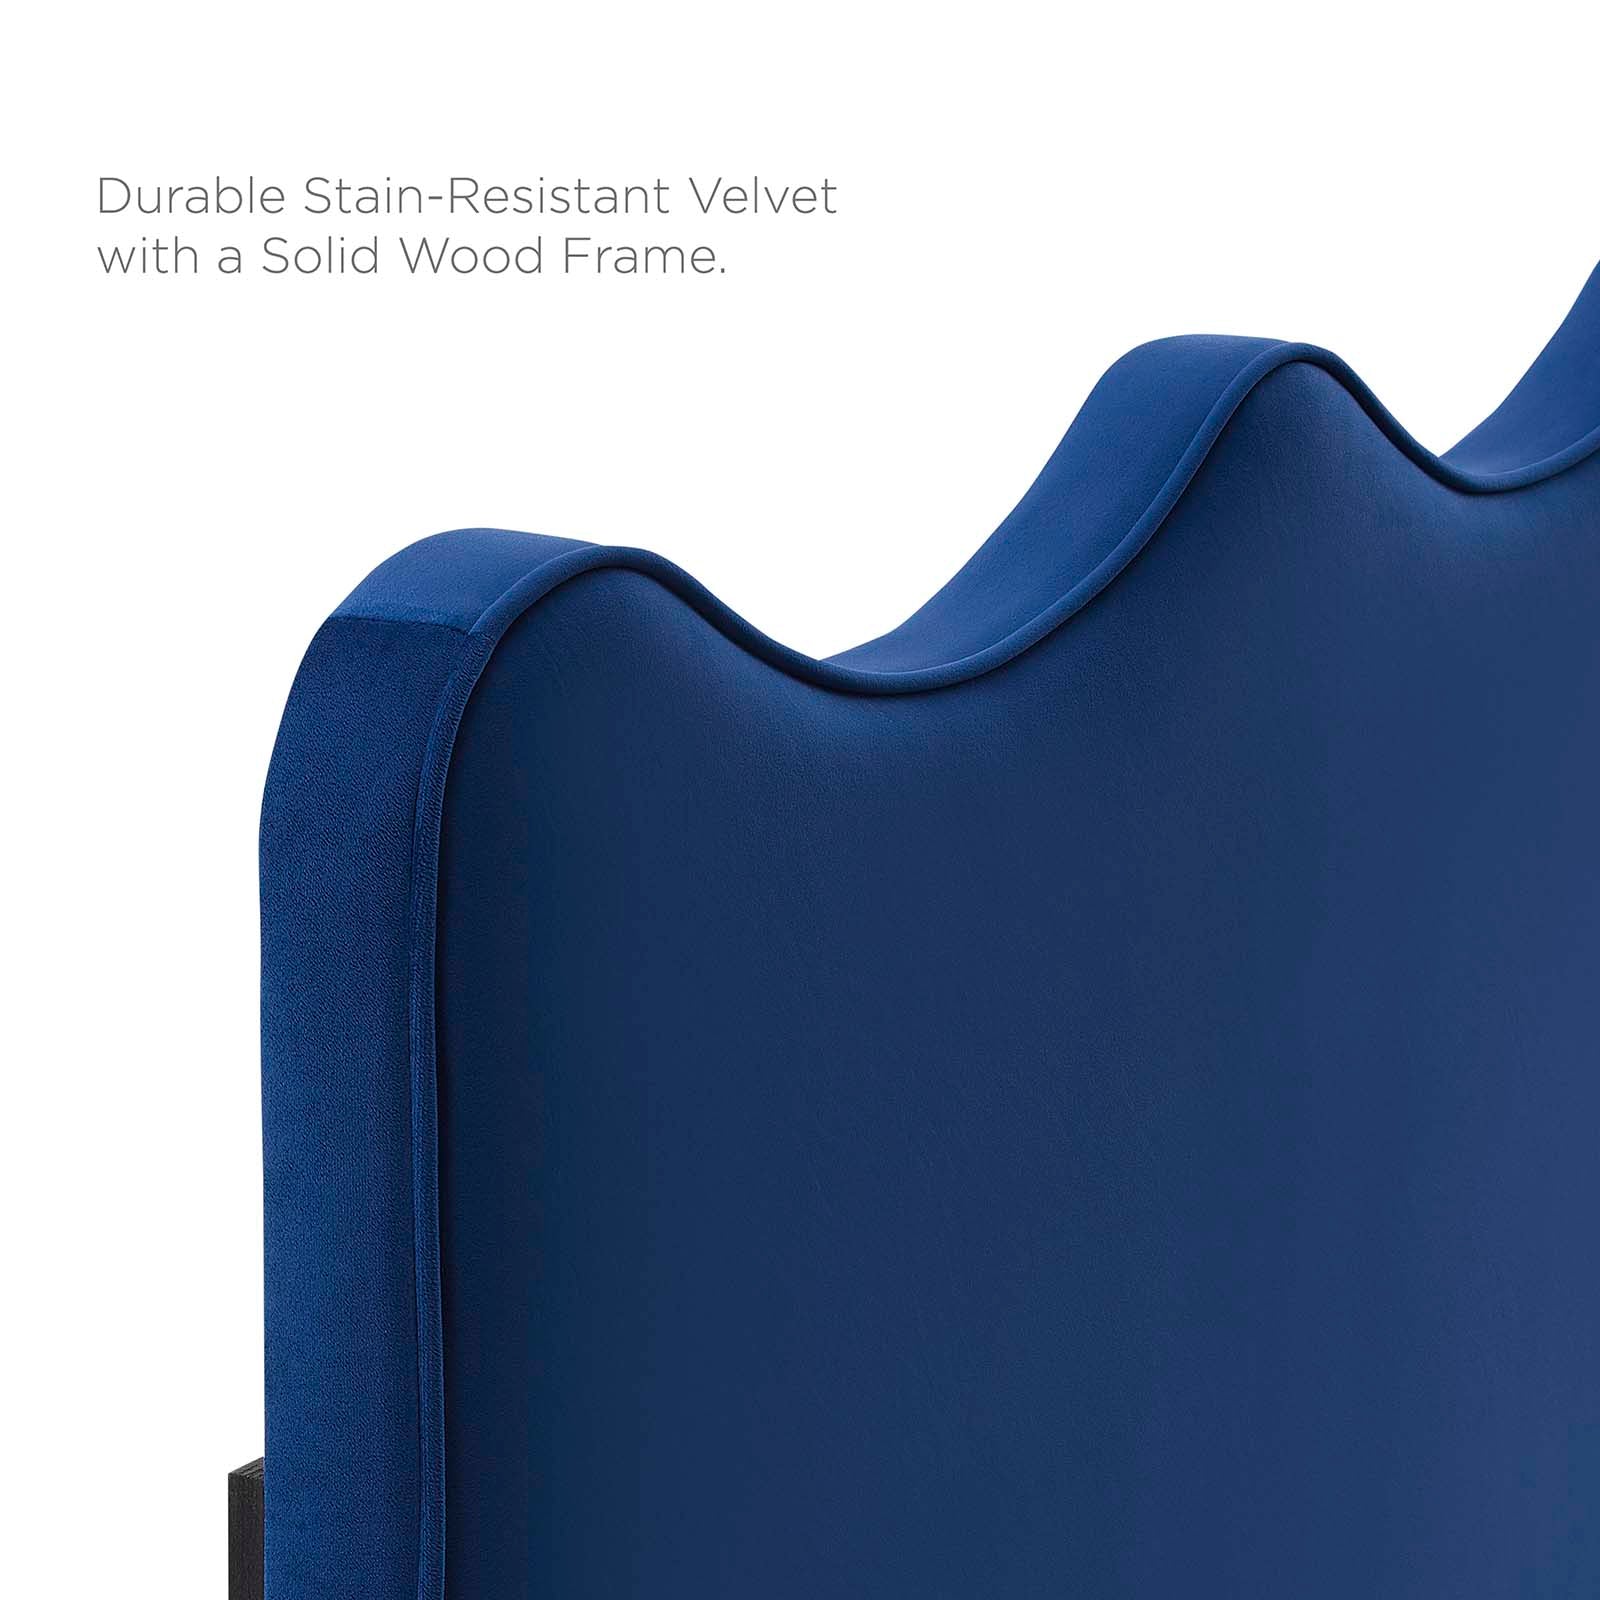 Current Performance Velvet Platform Bed With Black Wooden Legs - East Shore Modern Home Furnishings